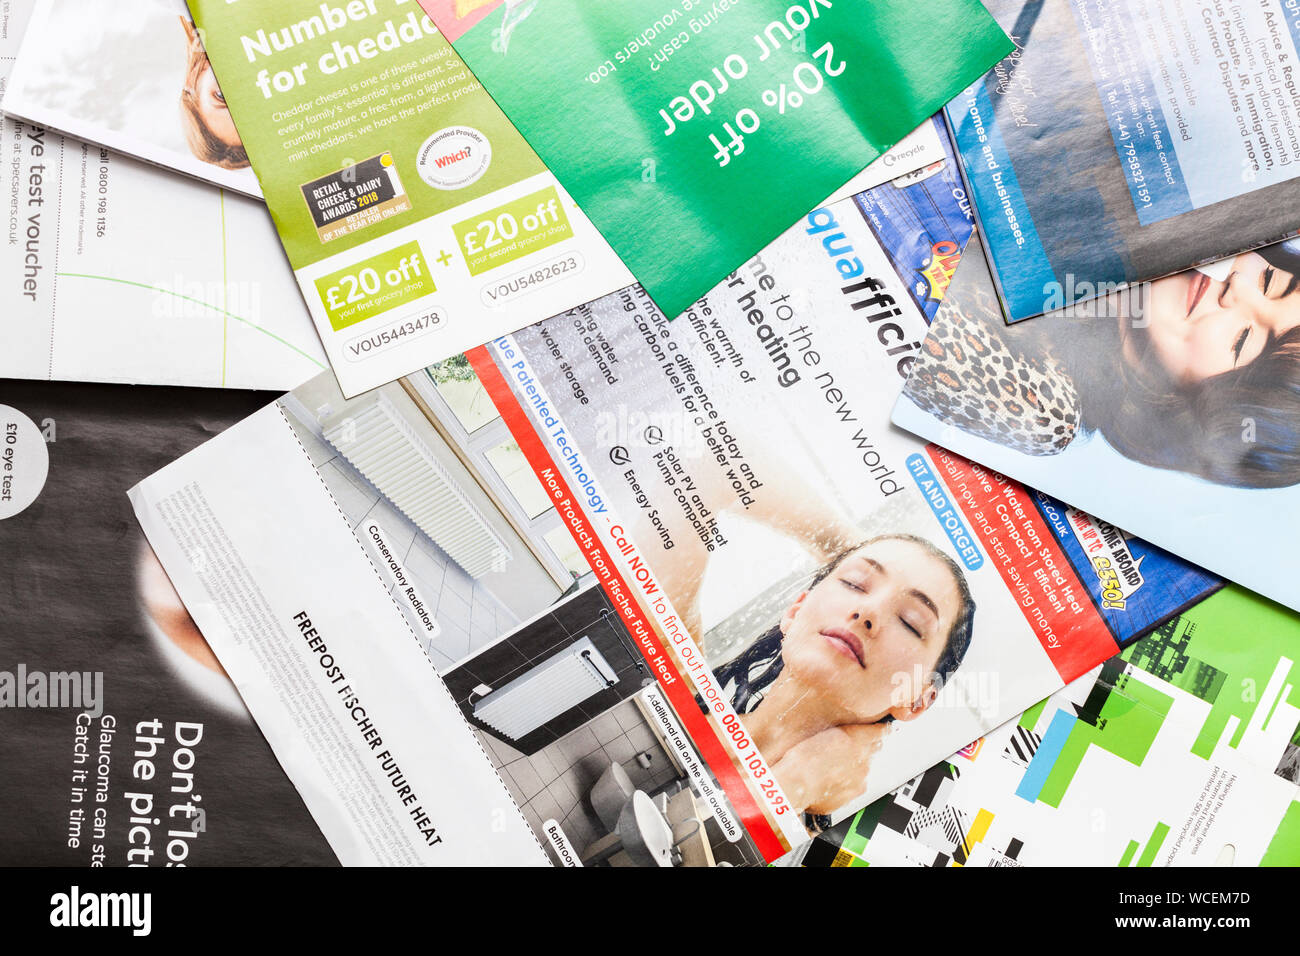 Junk mail marketing leaflets Stock Photo